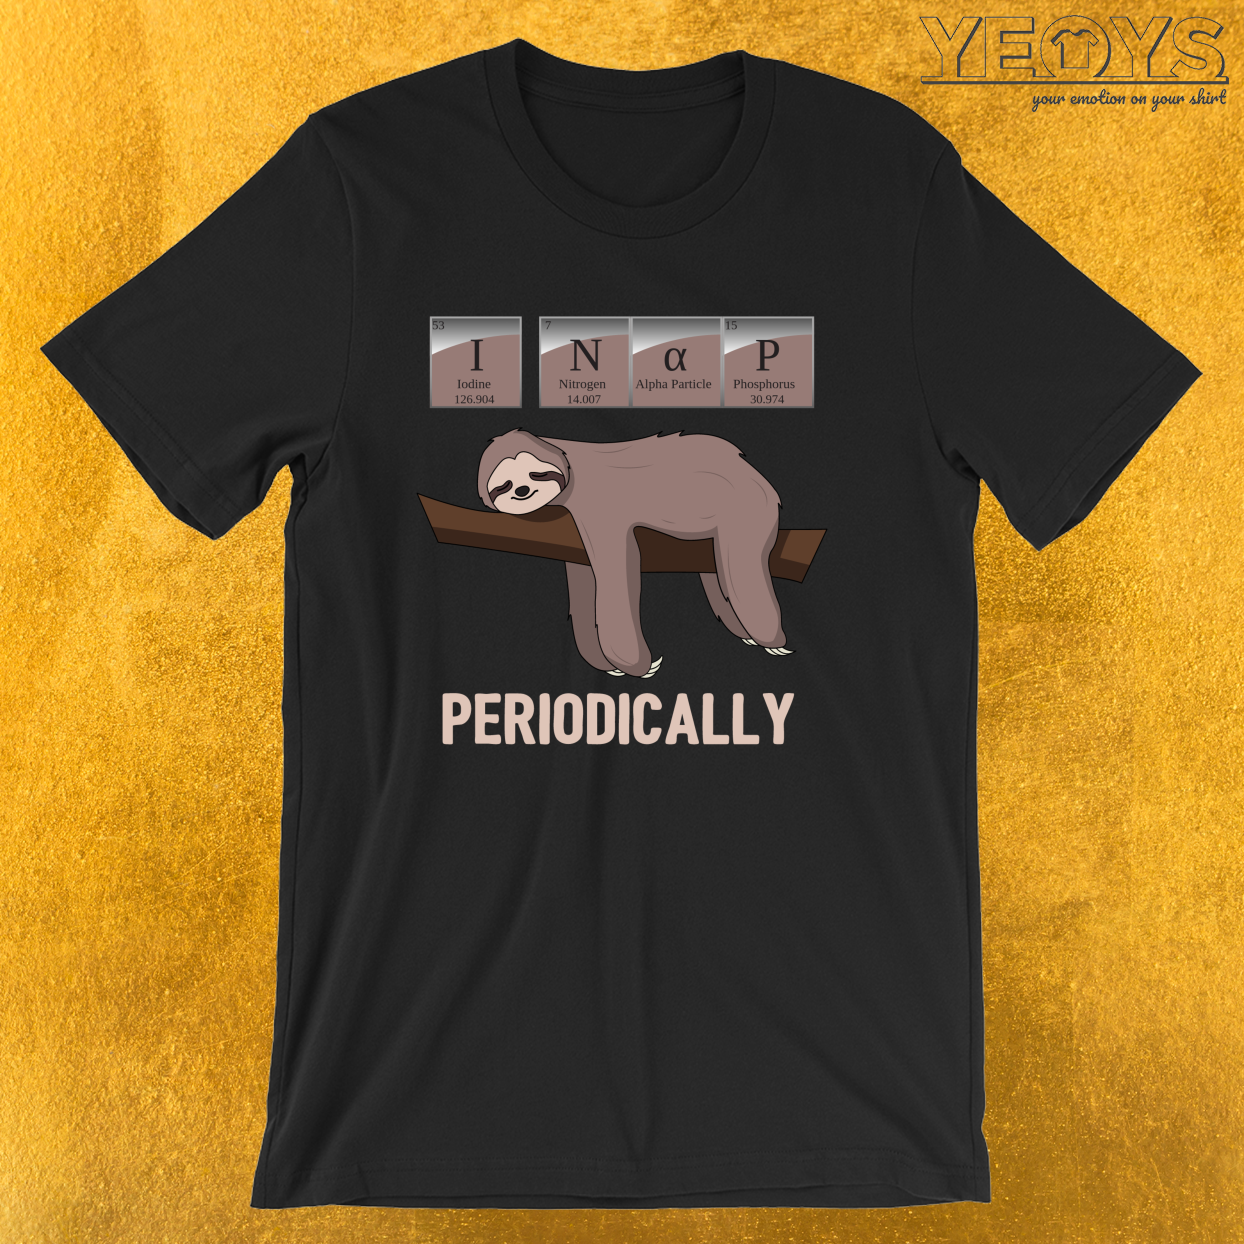 I Nap Periodically – Funny Chemistry Pun Sloth Tee